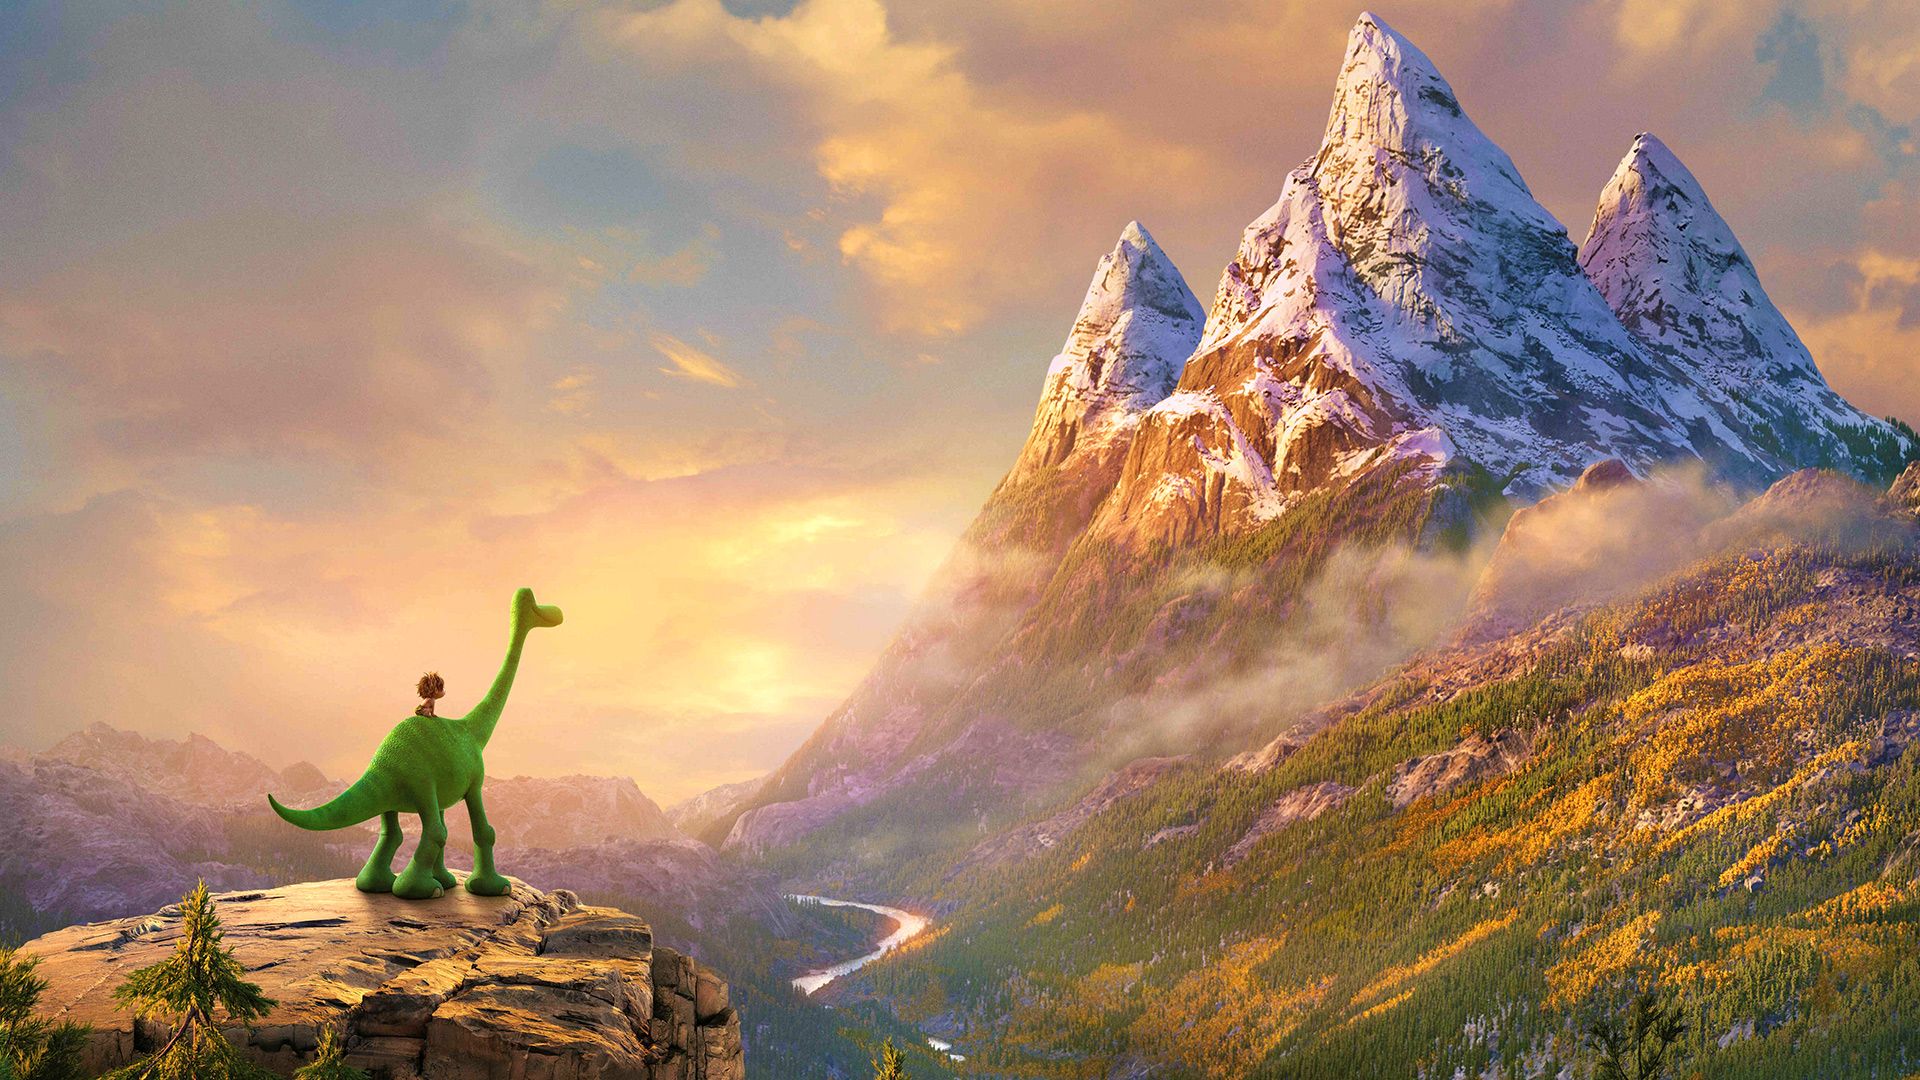 The Good Dinosaur background